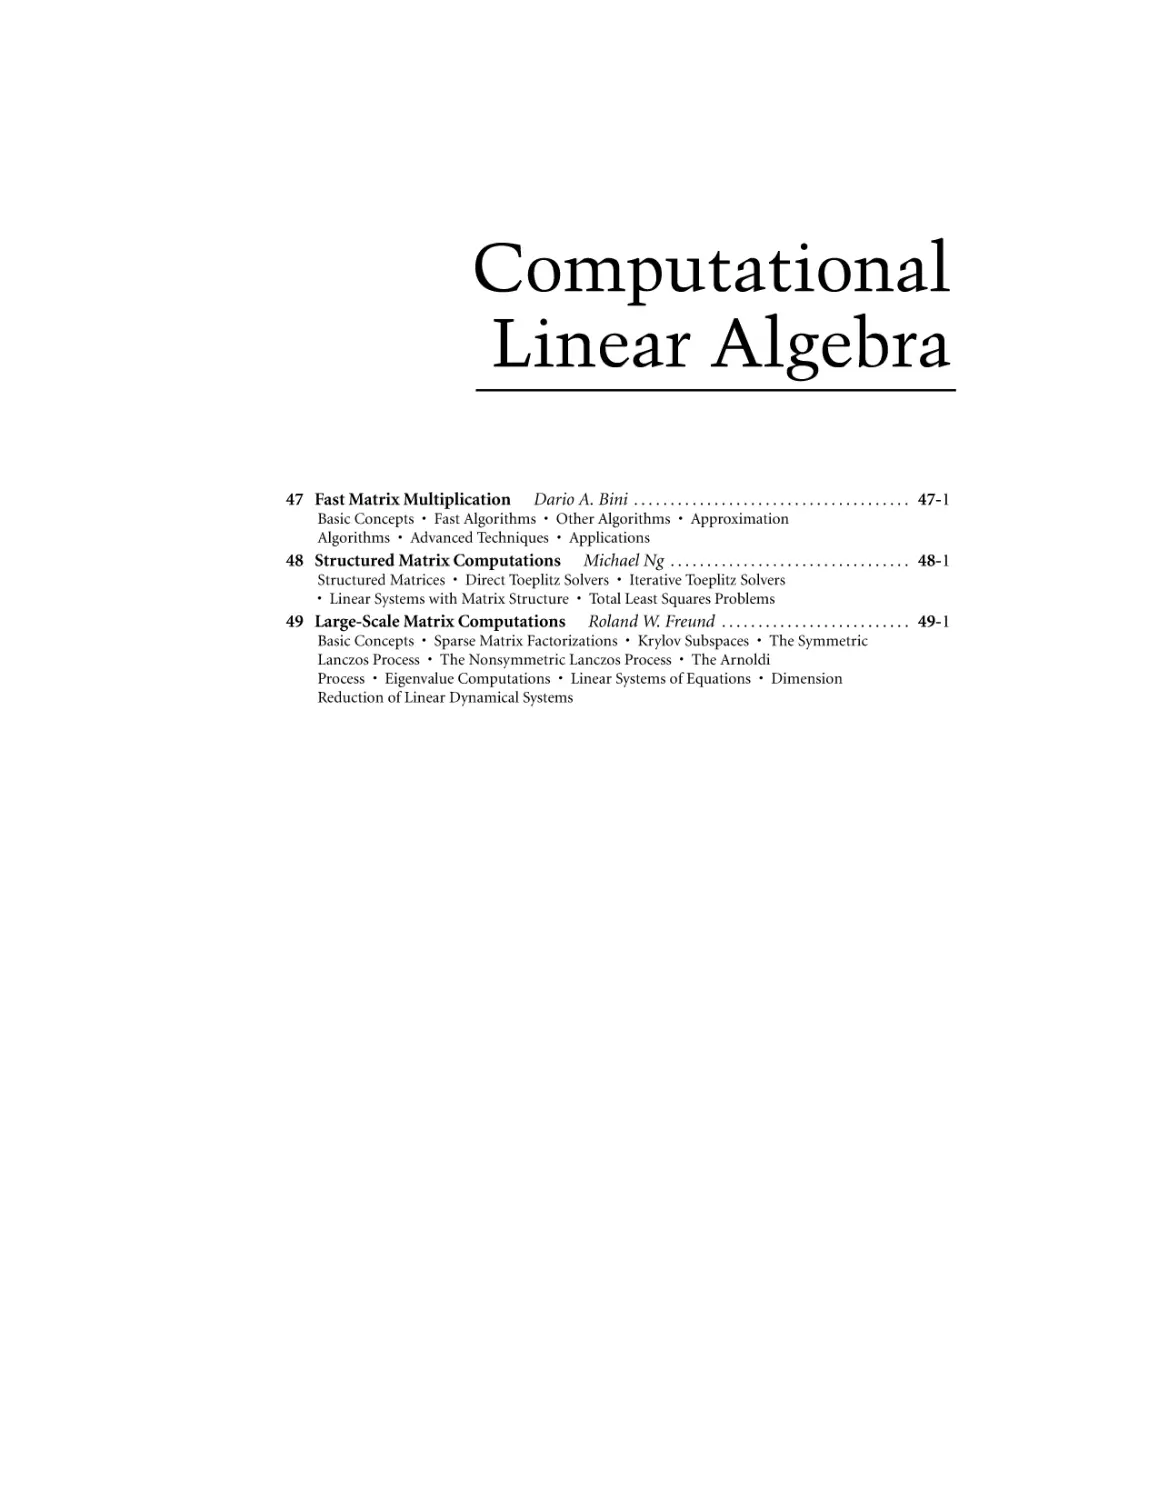 Computational Linear Algebra